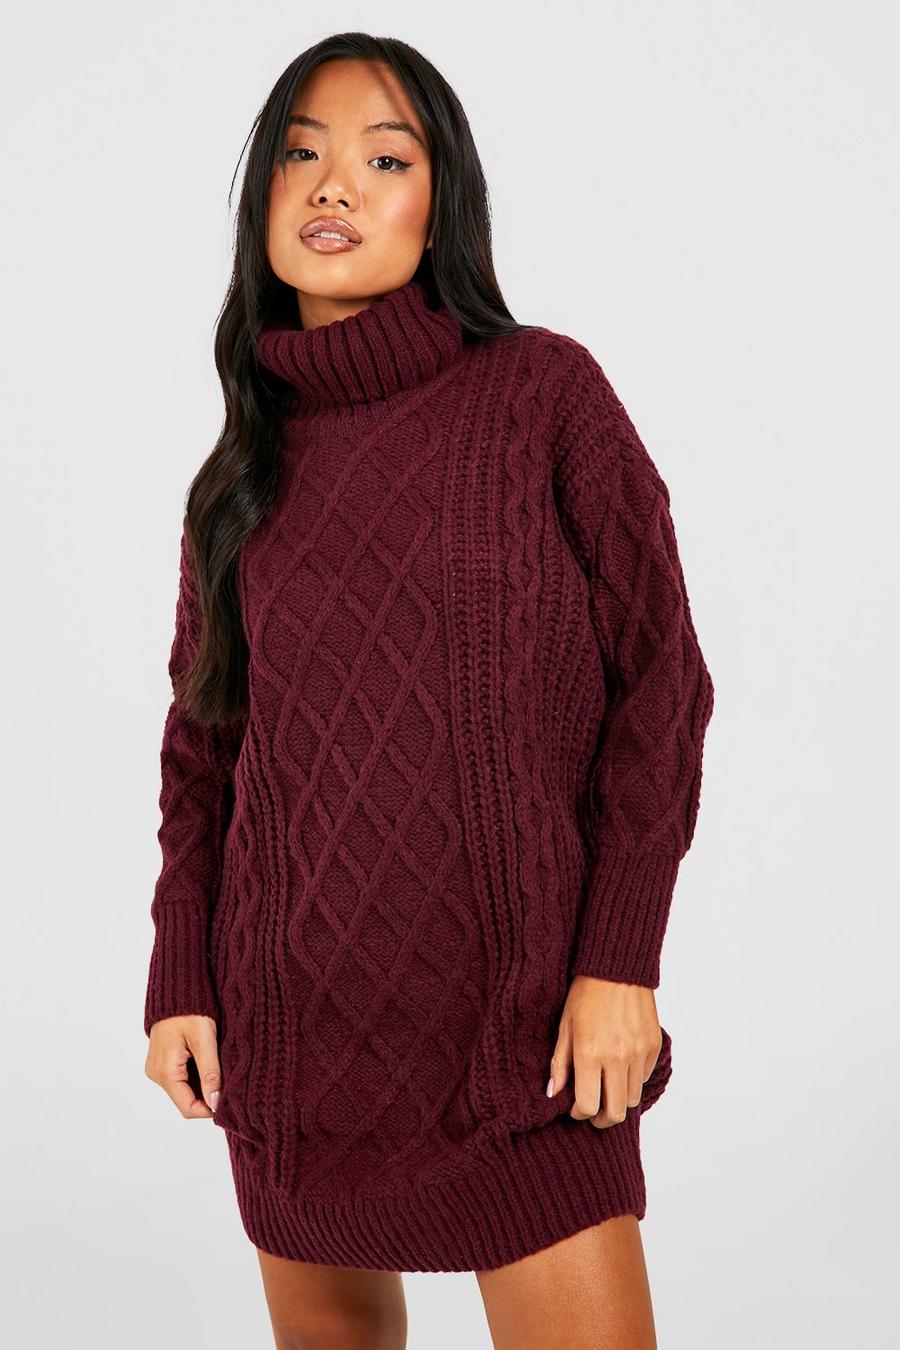 Berry Petite Turtleneck Diamond Cable Knit Sweater Dress